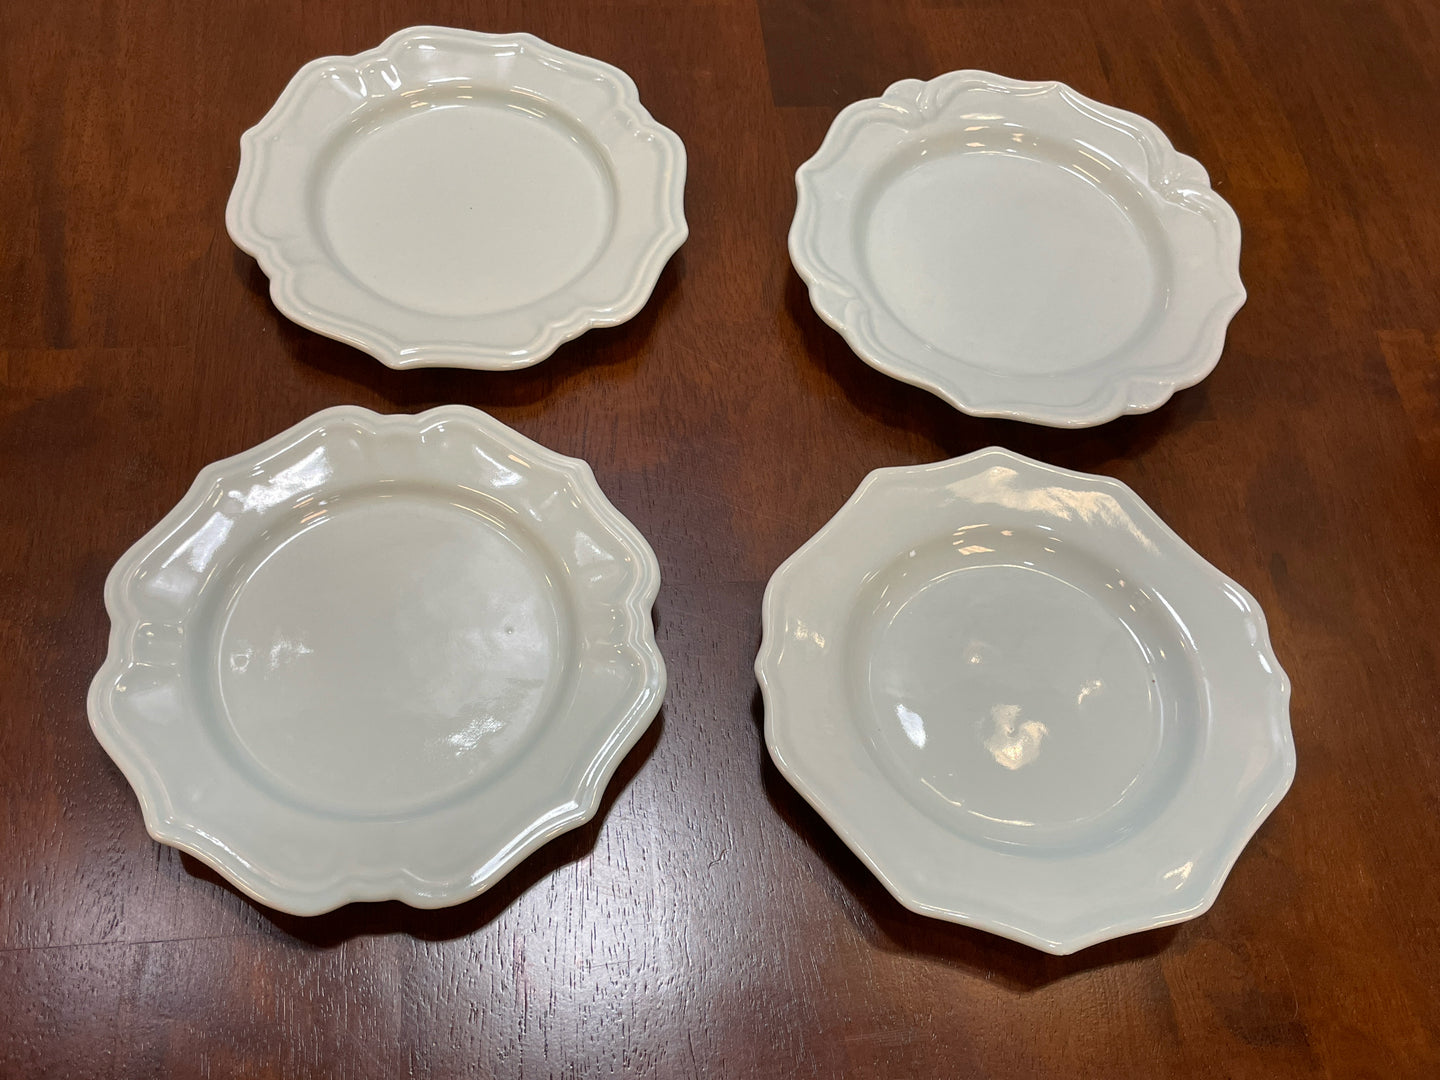 Four Light Blue Plates from Godinger & Co.